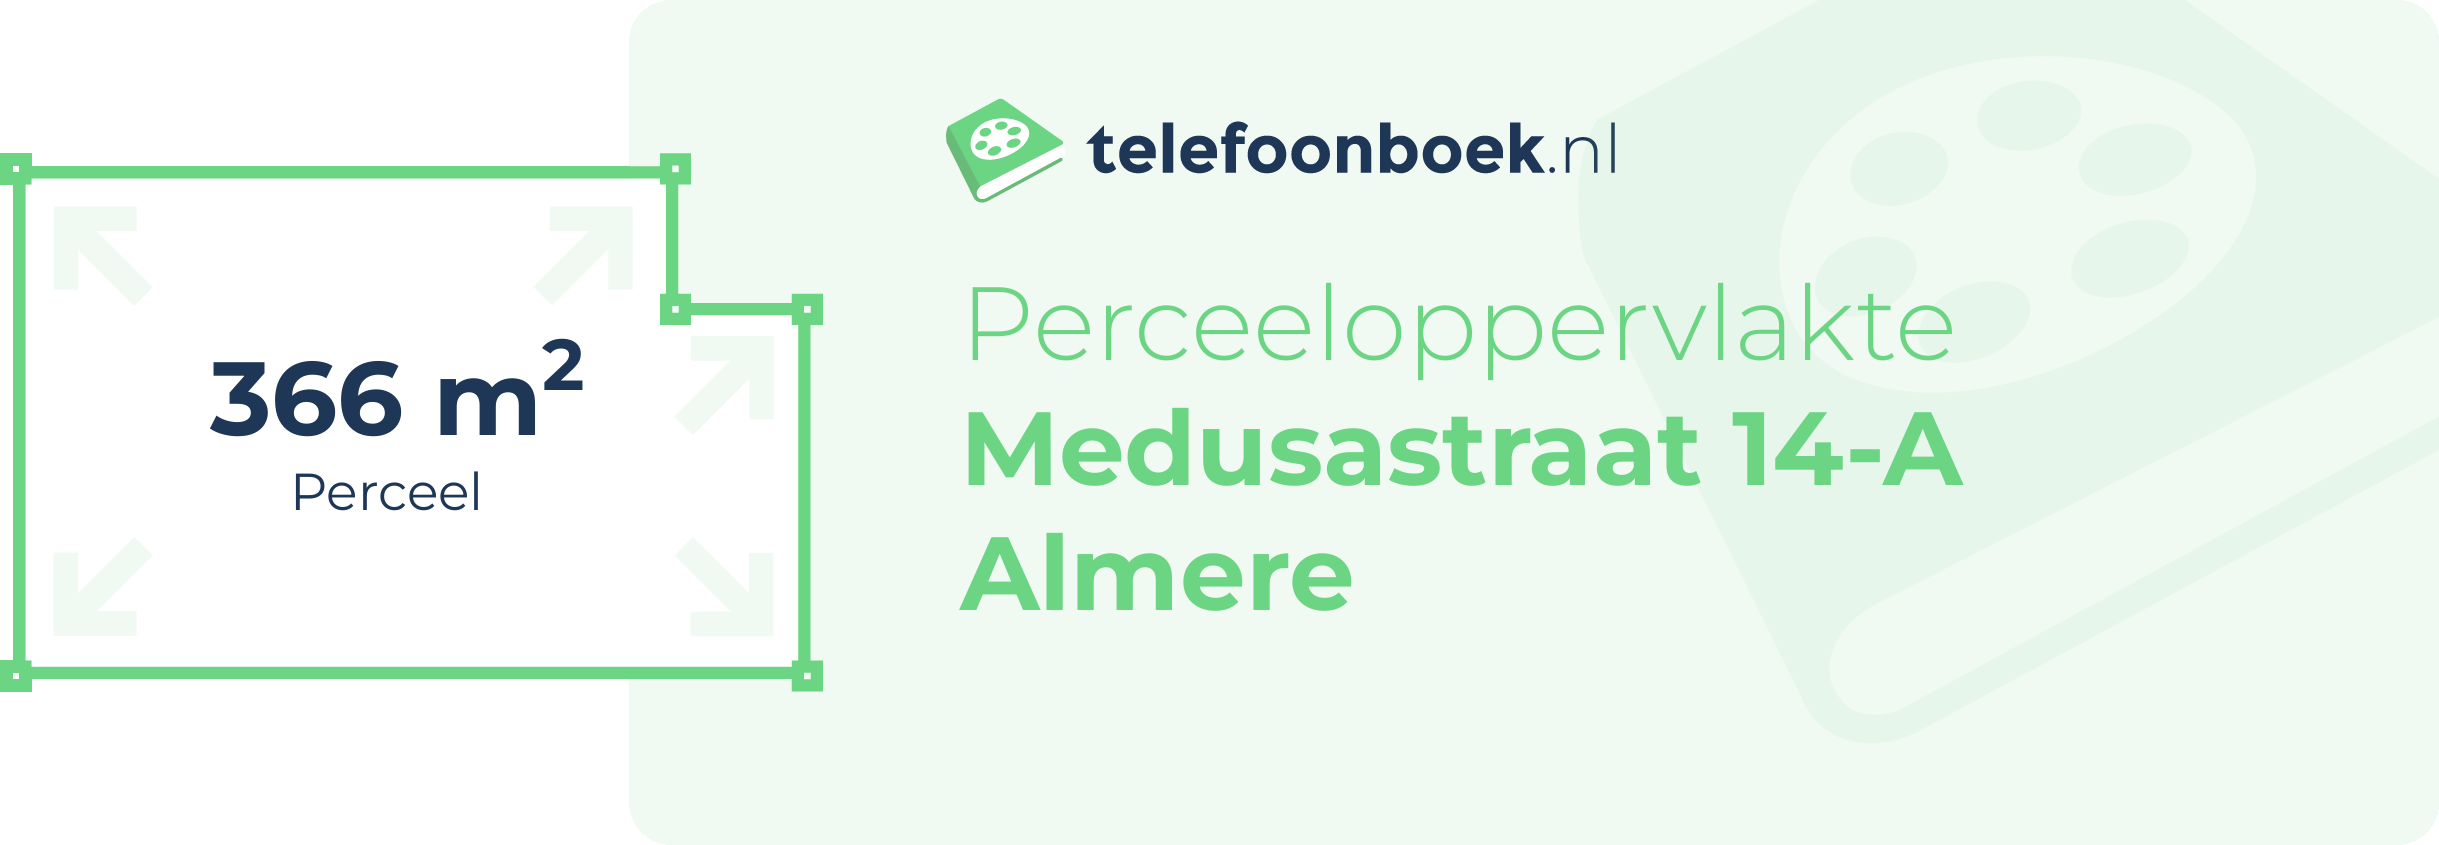 Perceeloppervlakte Medusastraat 14-A Almere